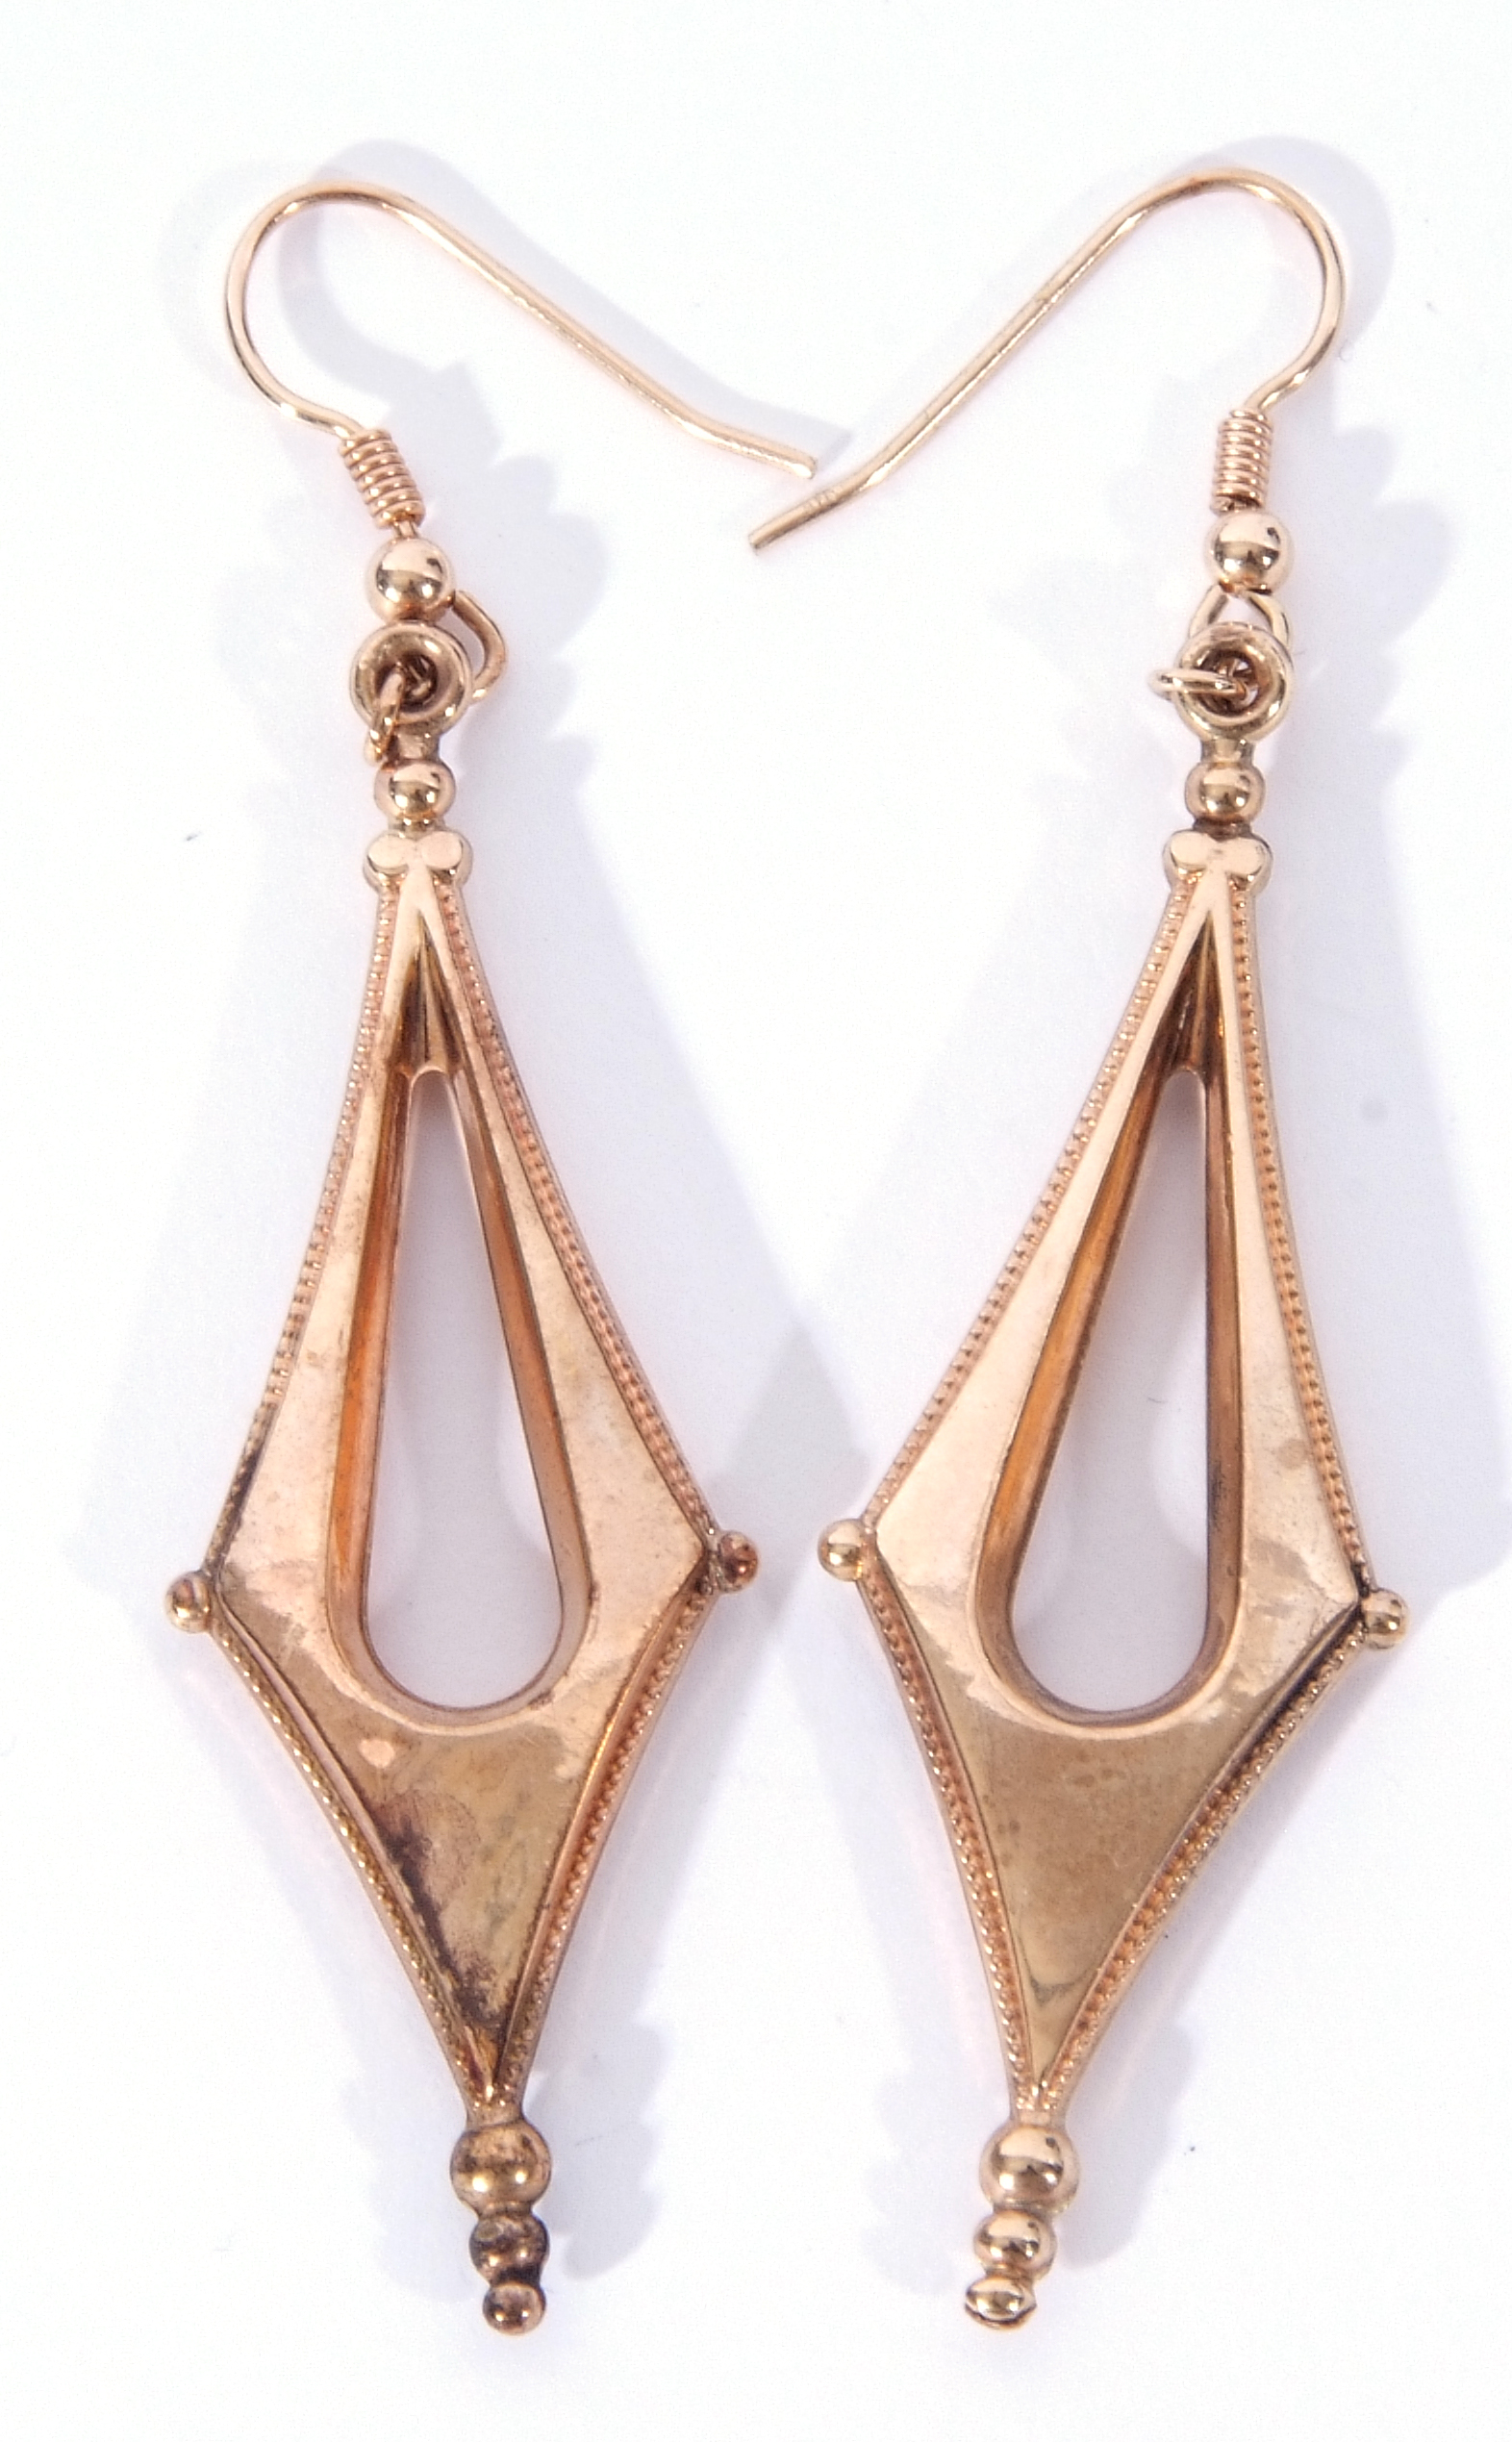 Pair of 375 stamped earrings of pierced lozenge form, 5cm long with shepherd hook fittings, 3gms - Image 3 of 3